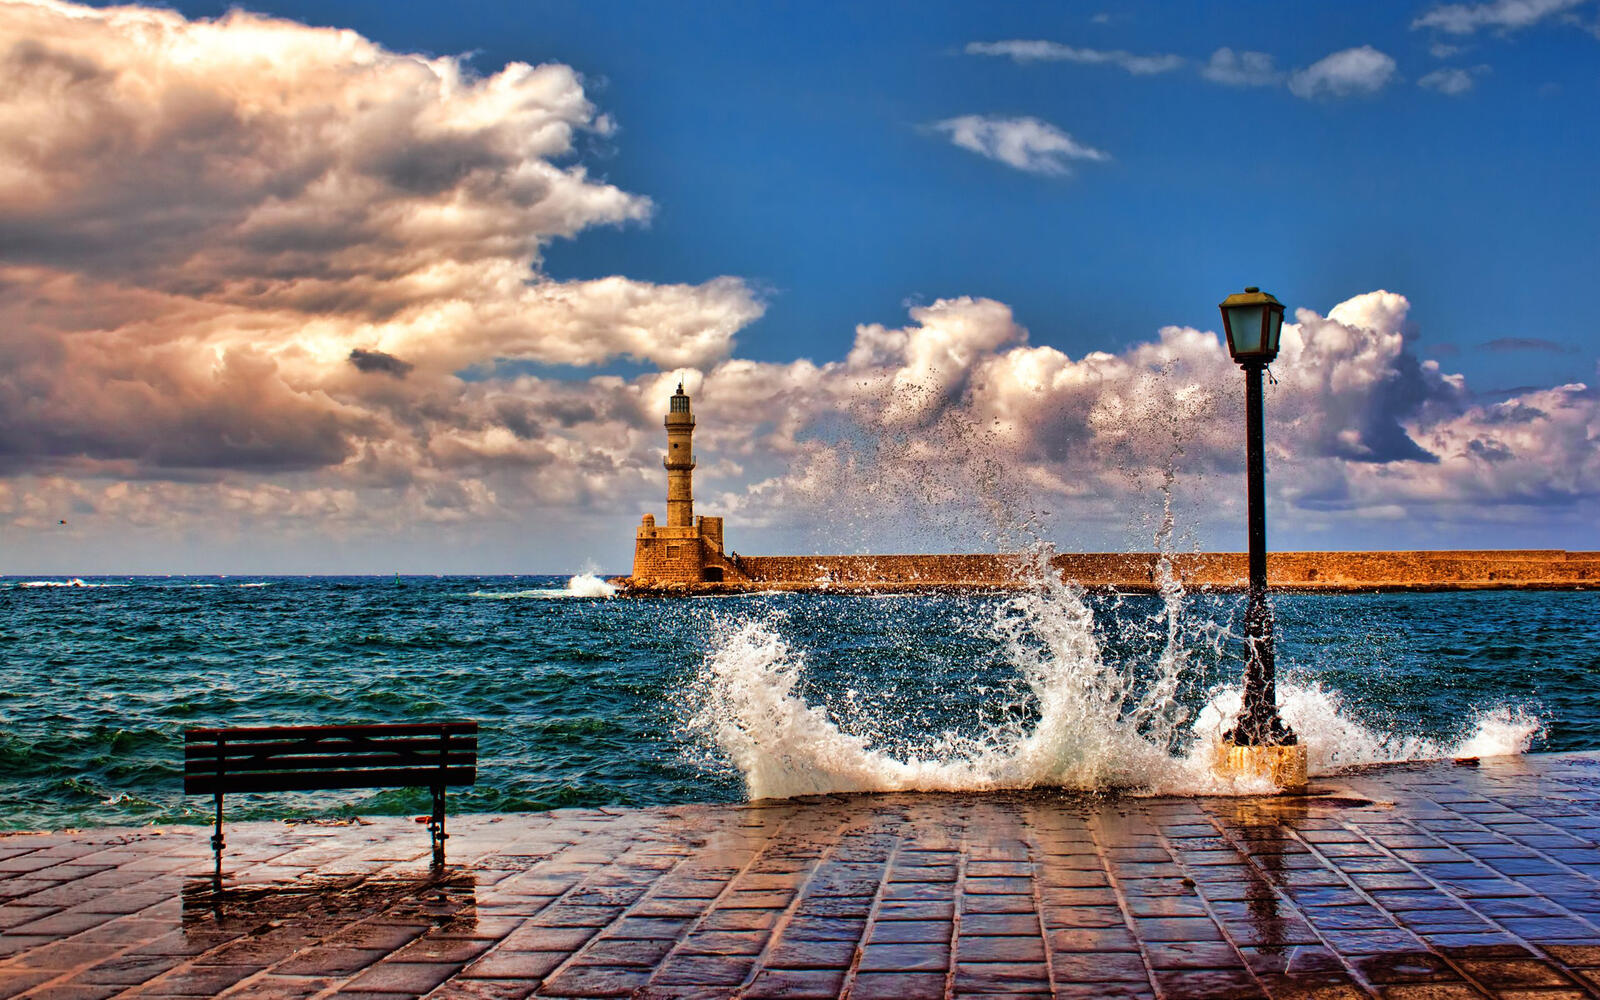 Бесплатное фото Тротуар на берегу моря с видом на маяк